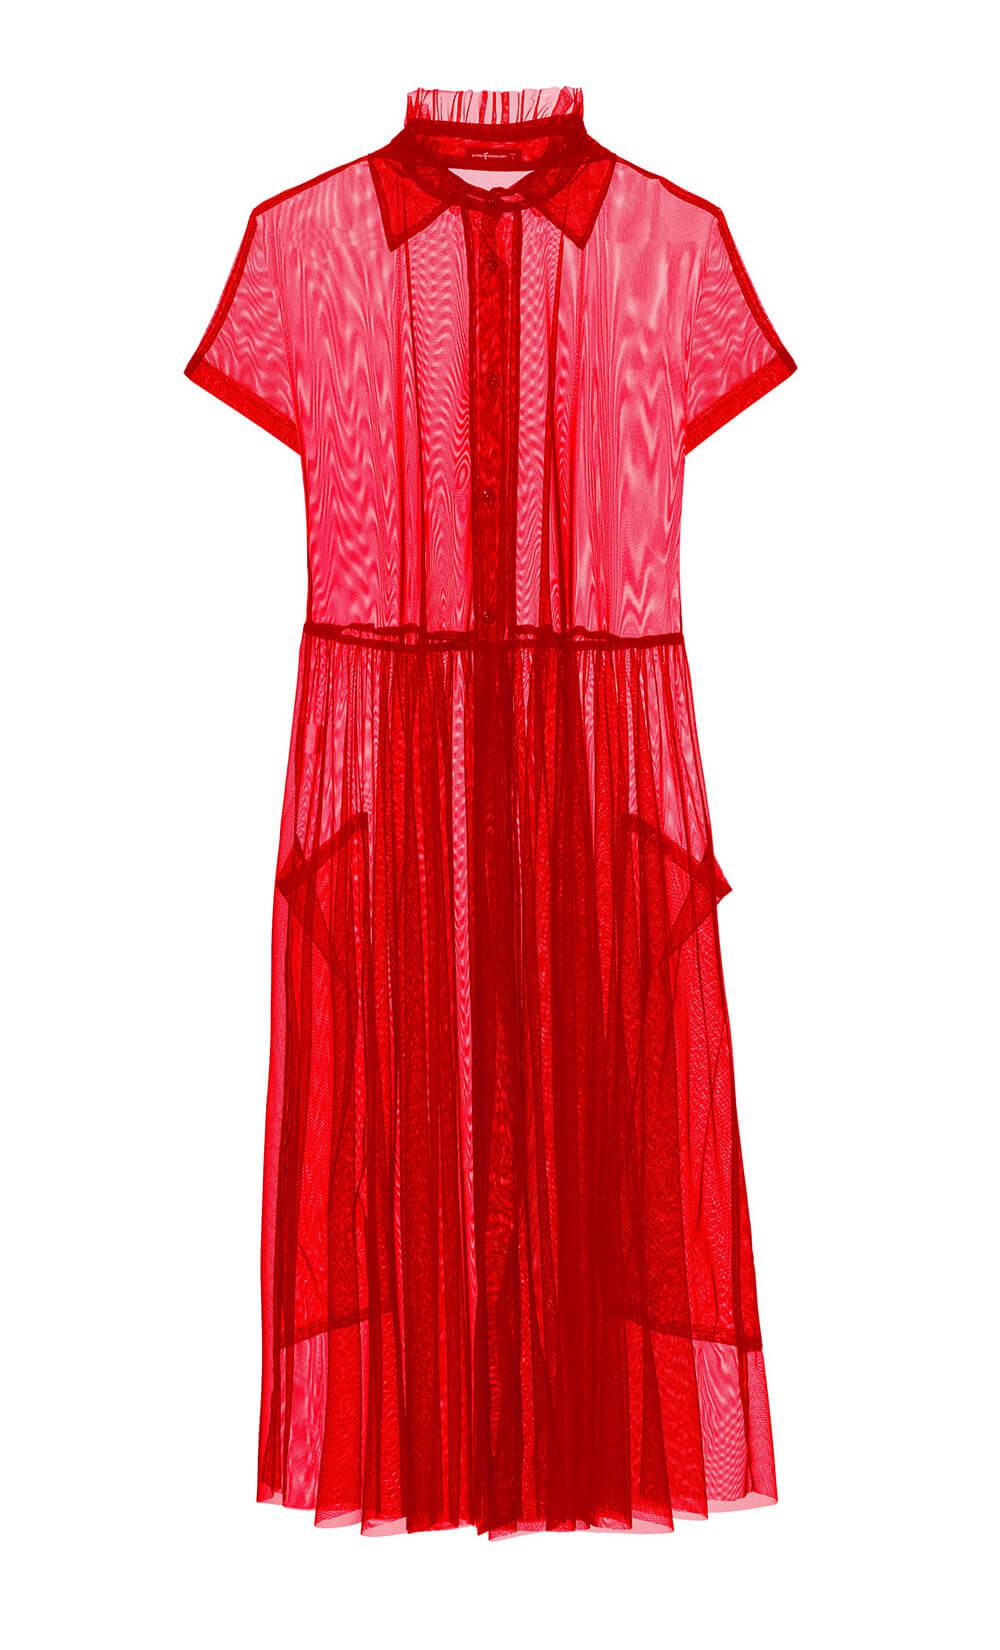 Red Santorini Dress